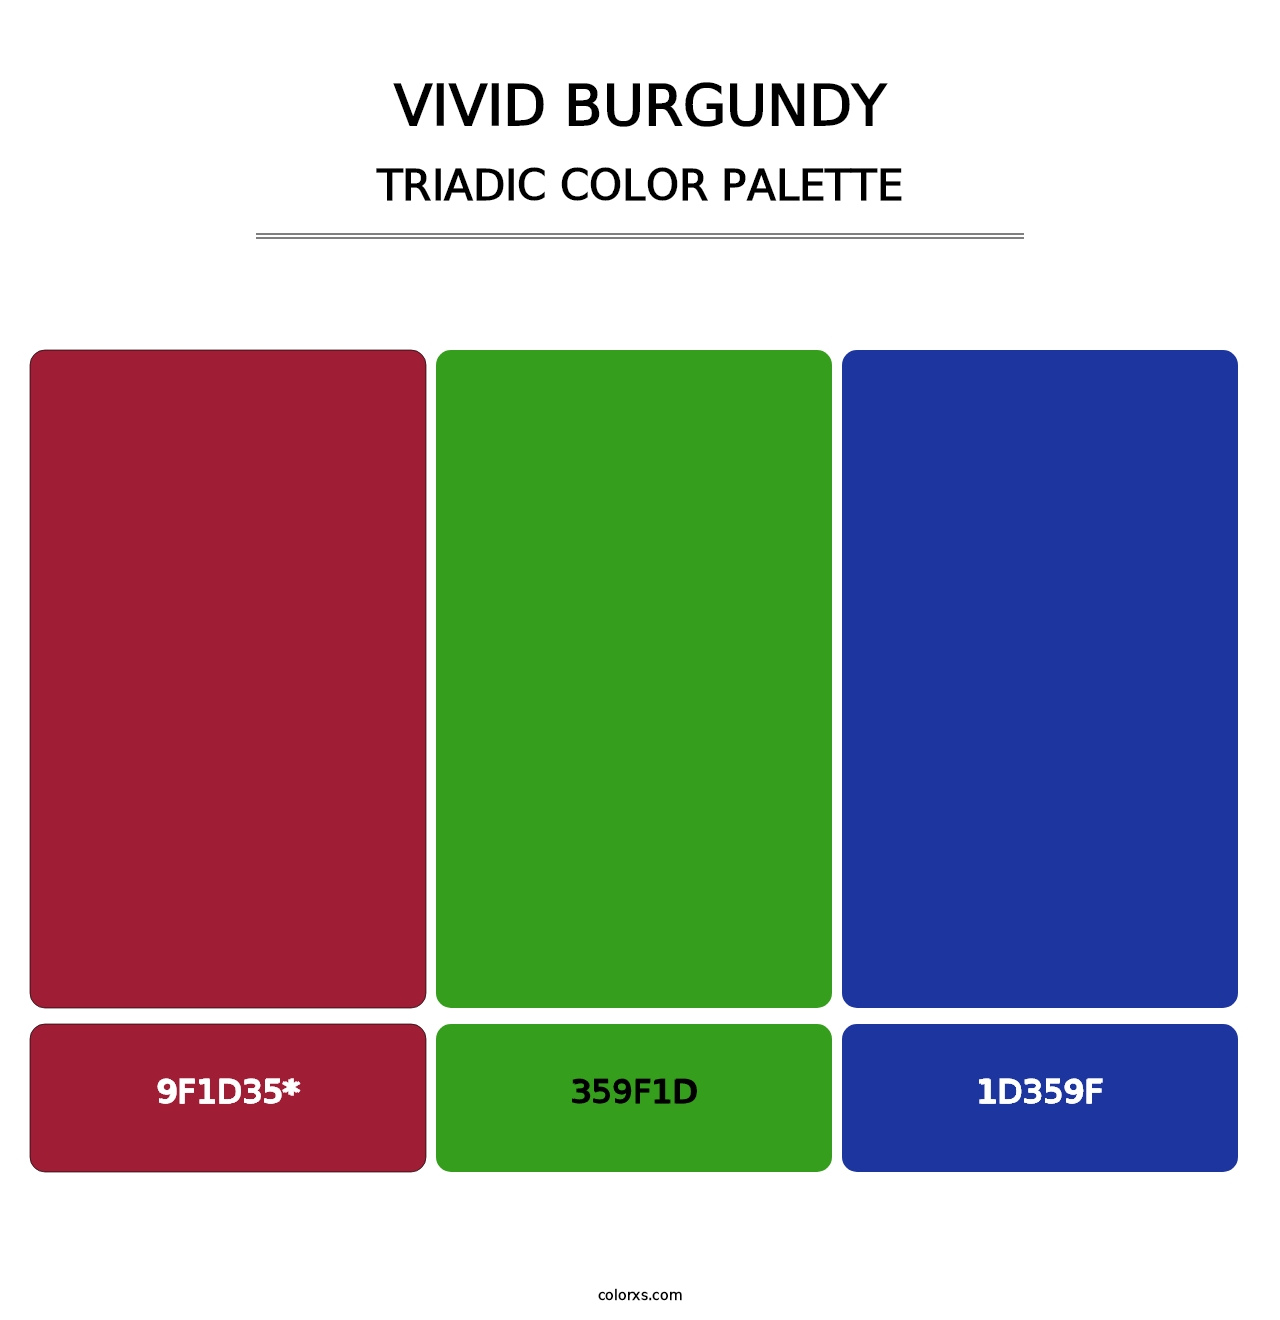 Vivid Burgundy - Triadic Color Palette